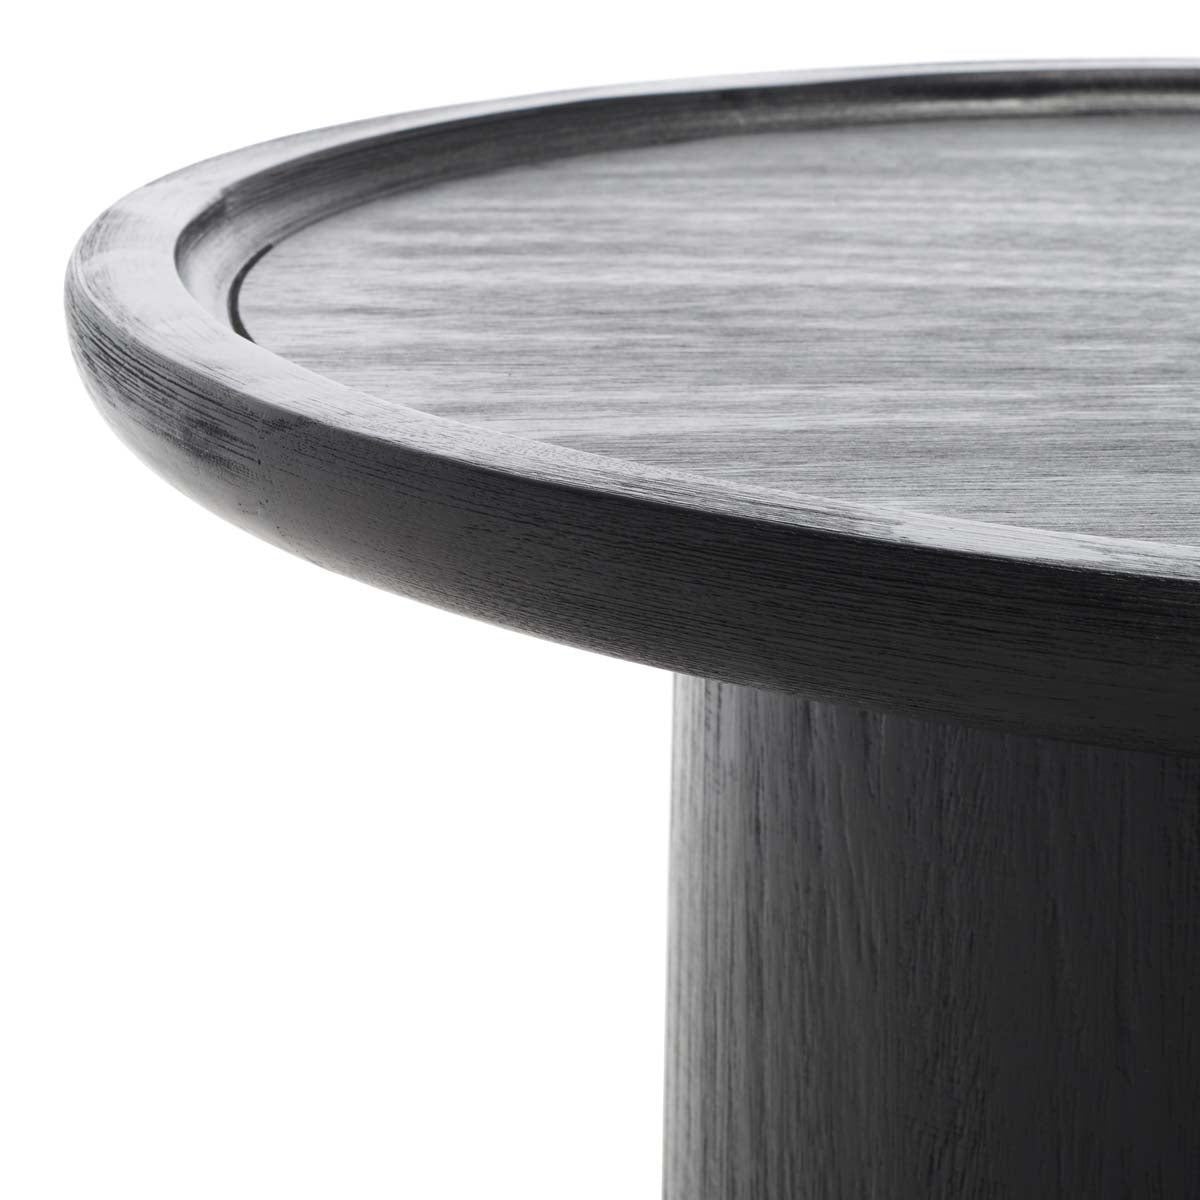 Safavieh Devin Round Pedestal Coffee Table , COF6600 - Black